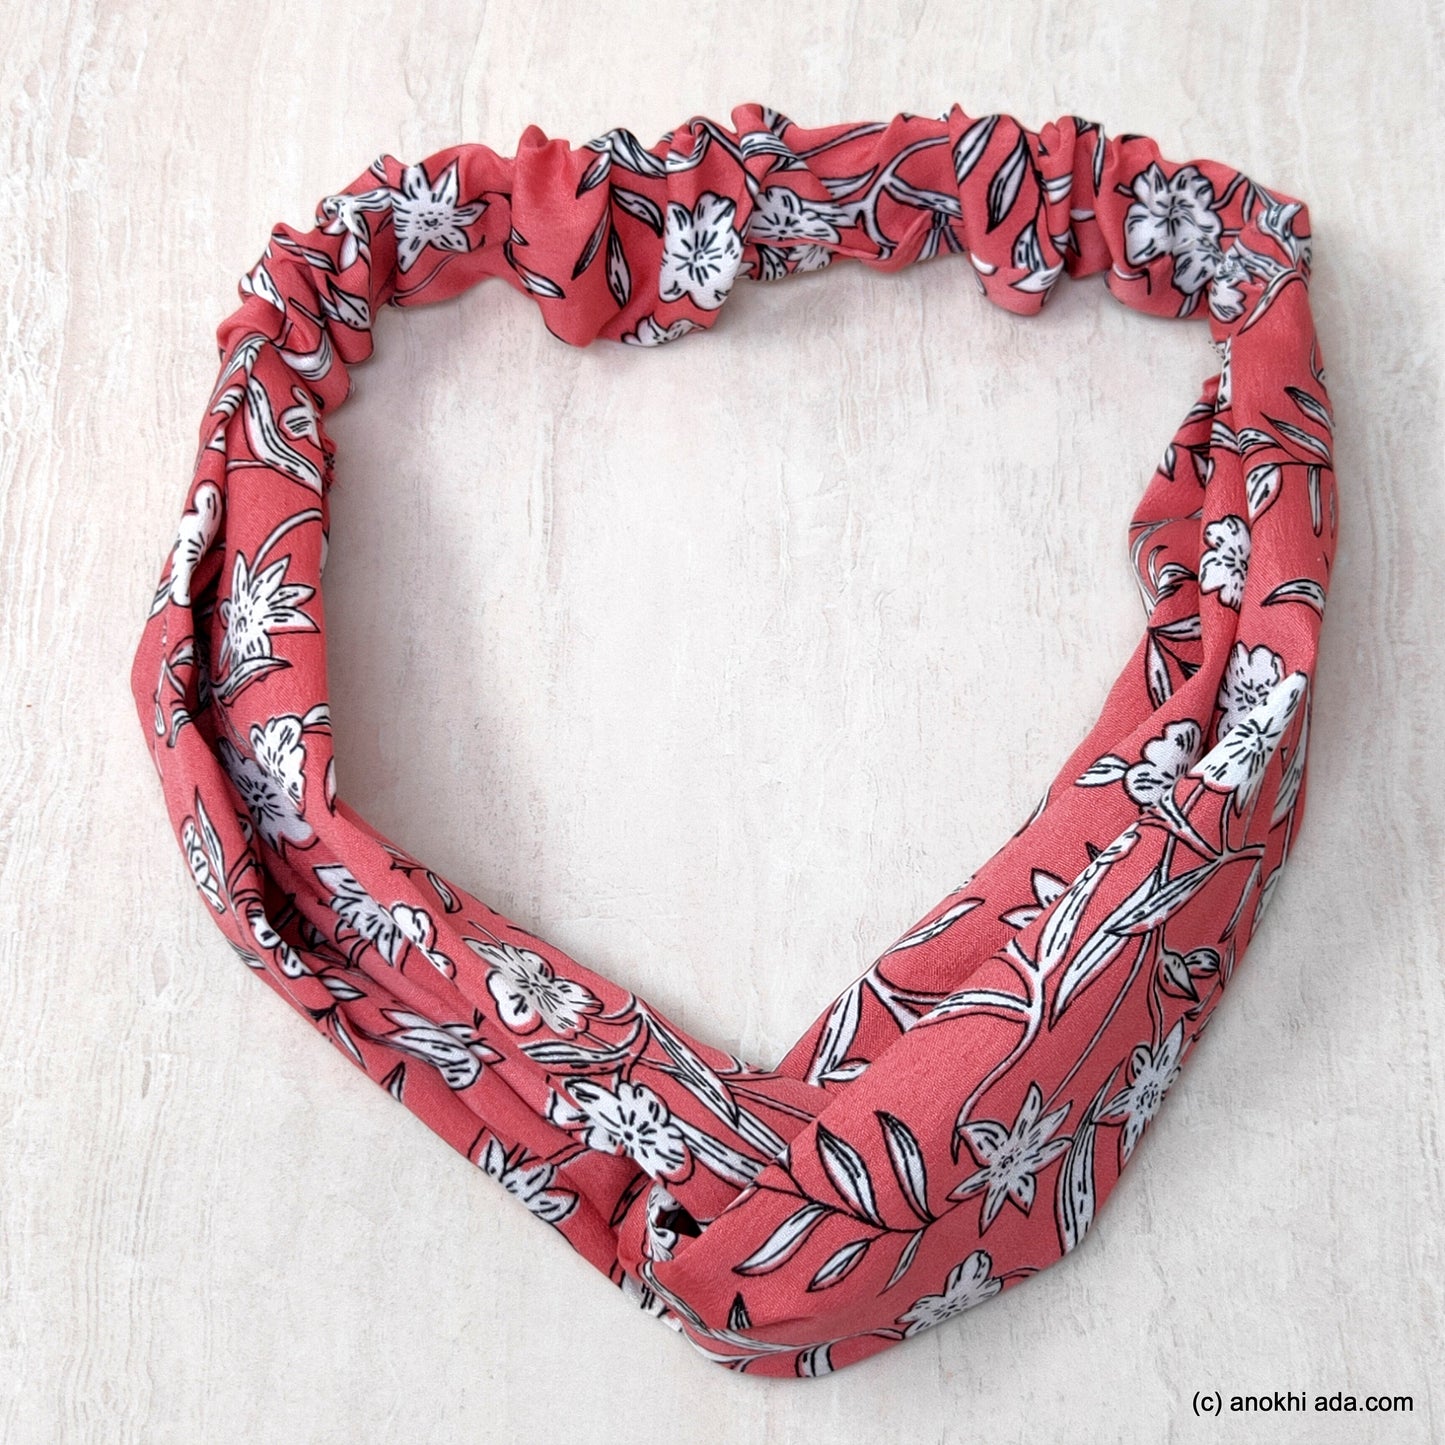 Anokhi Ada Multi-Colour Printed Fabric Headband for Girls and Women (ZK-26)